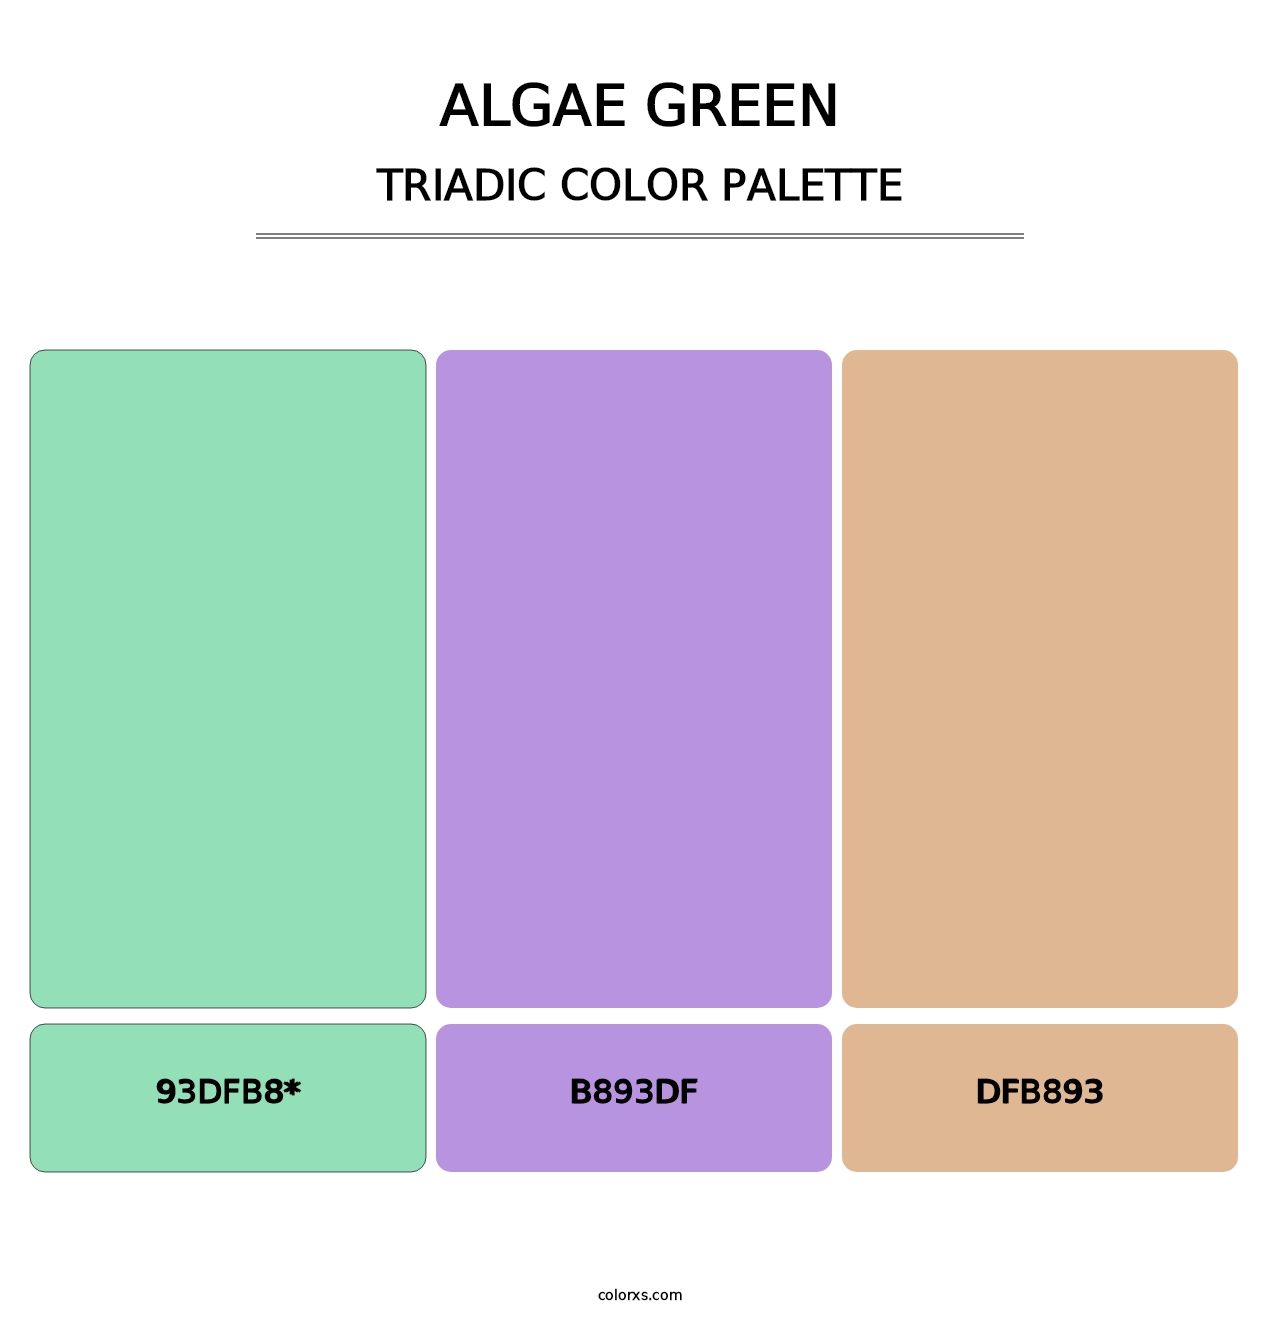 Algae Green - Triadic Color Palette